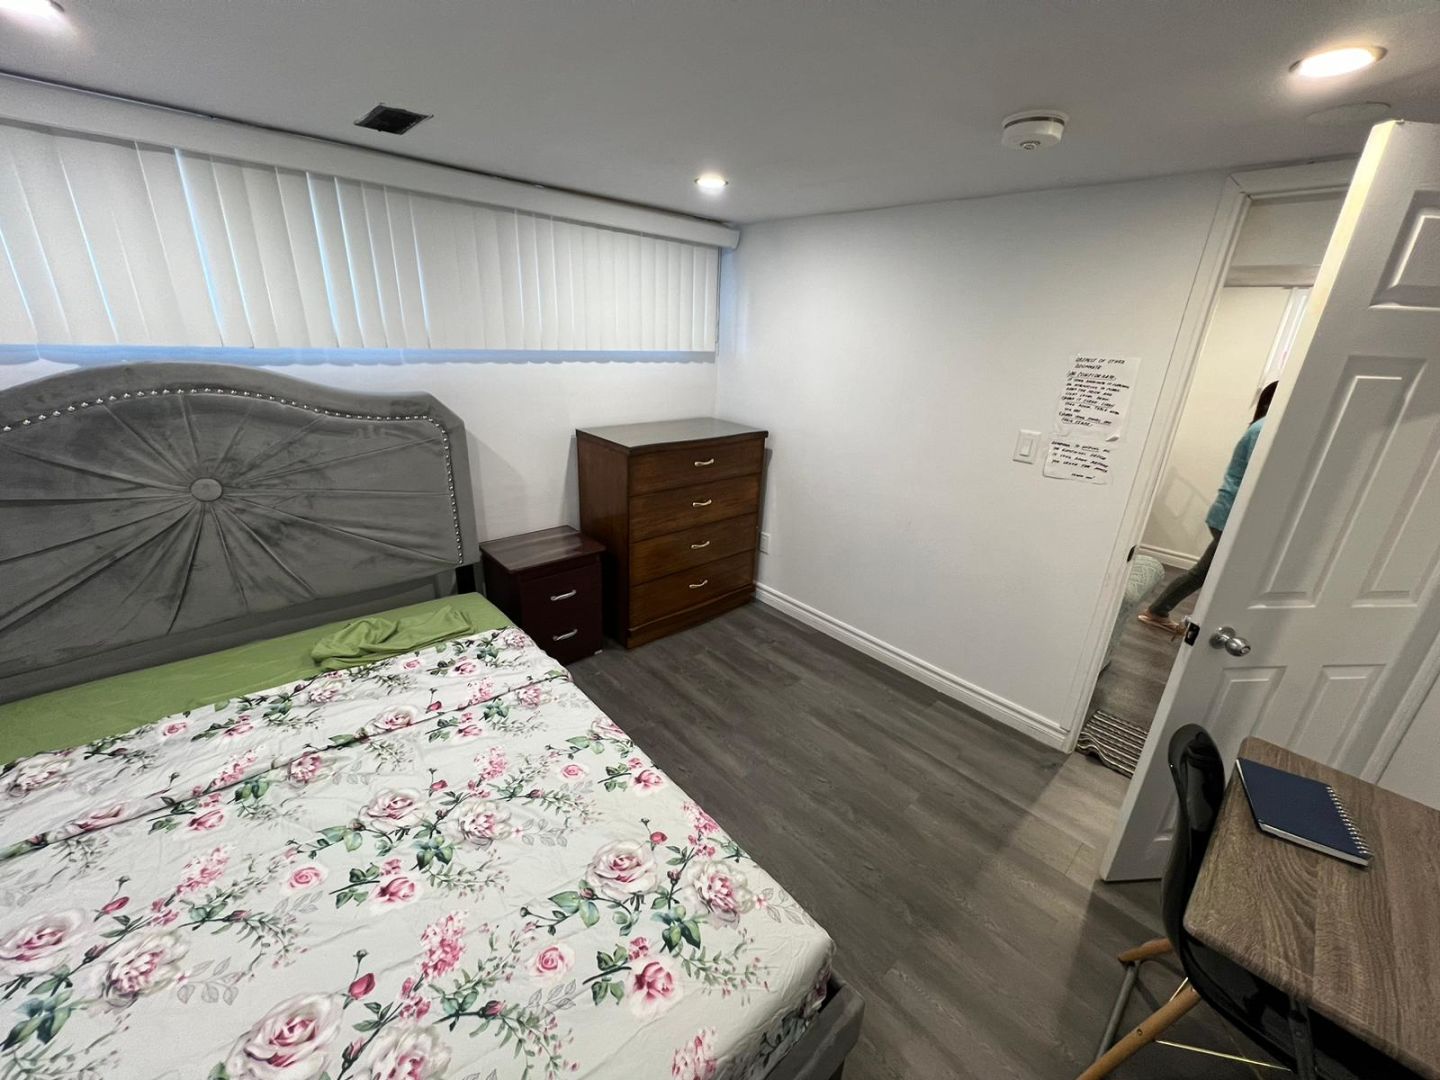 Premium Homestay Room - Thurrock Rd, Toronto room for rent 62